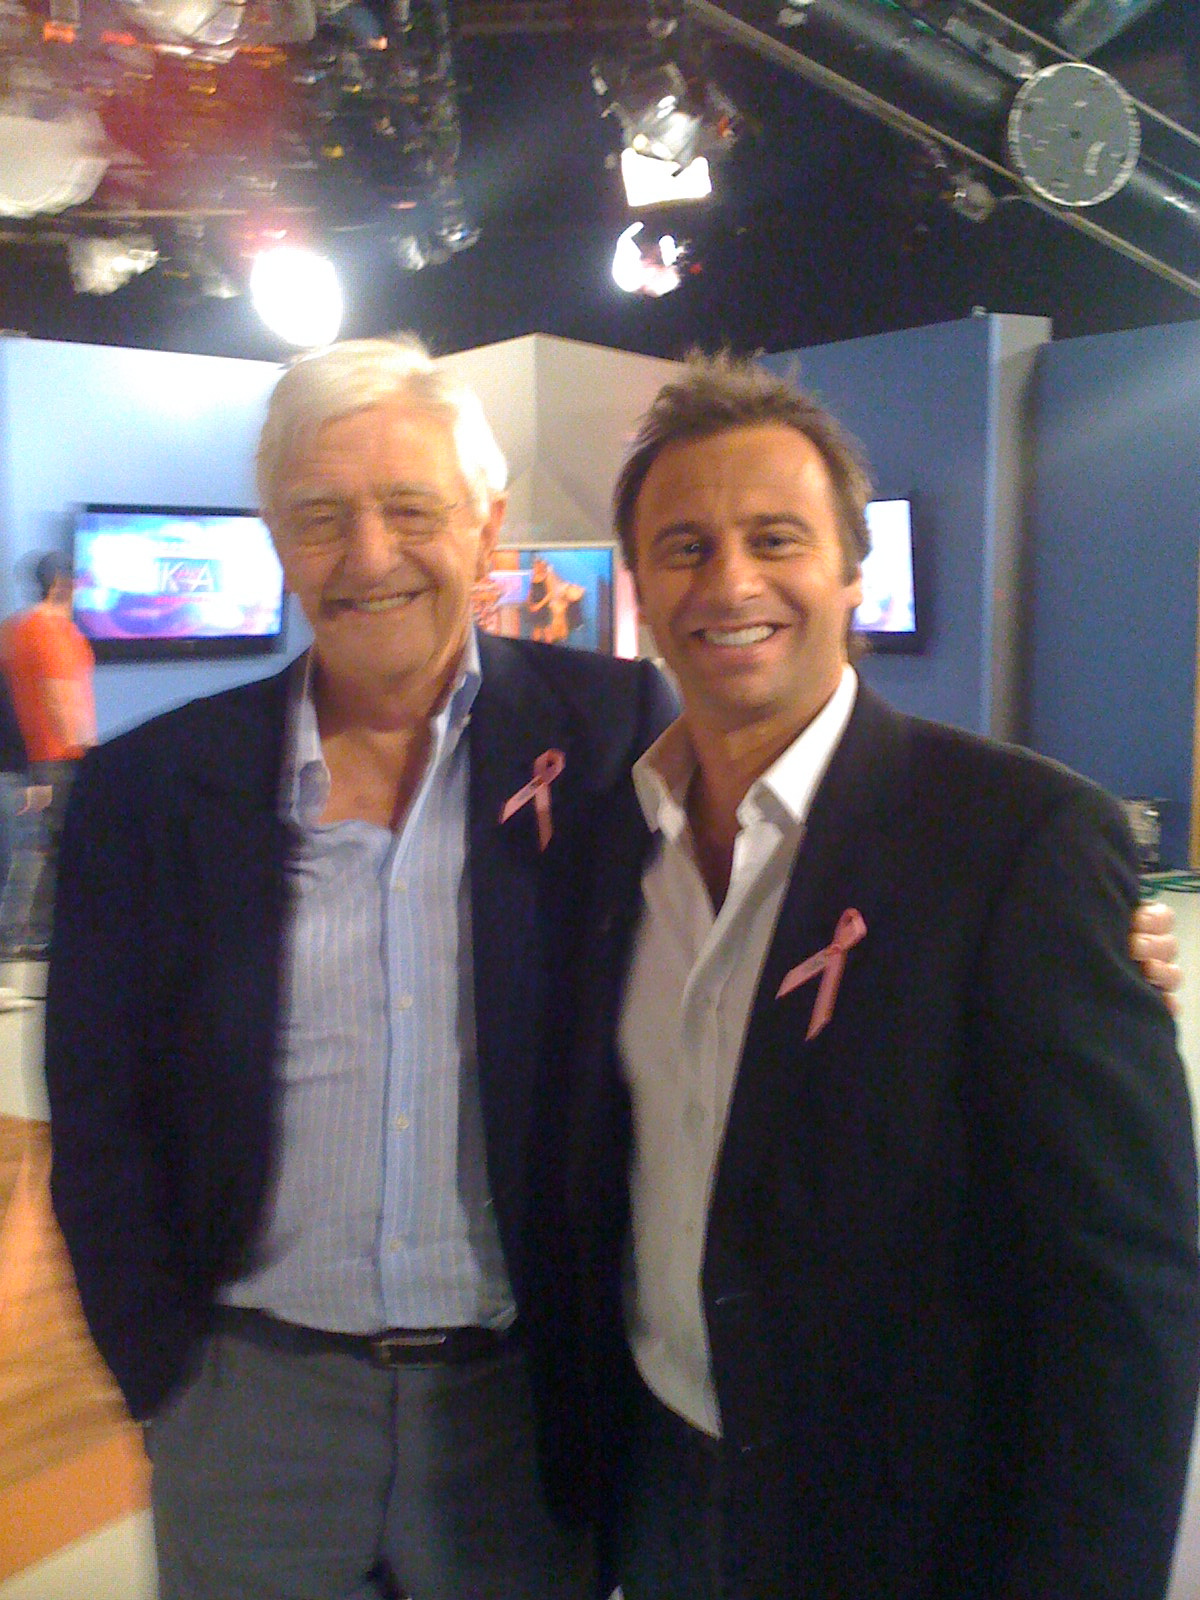 My favourite guest - British TV royalty...Parkinson.